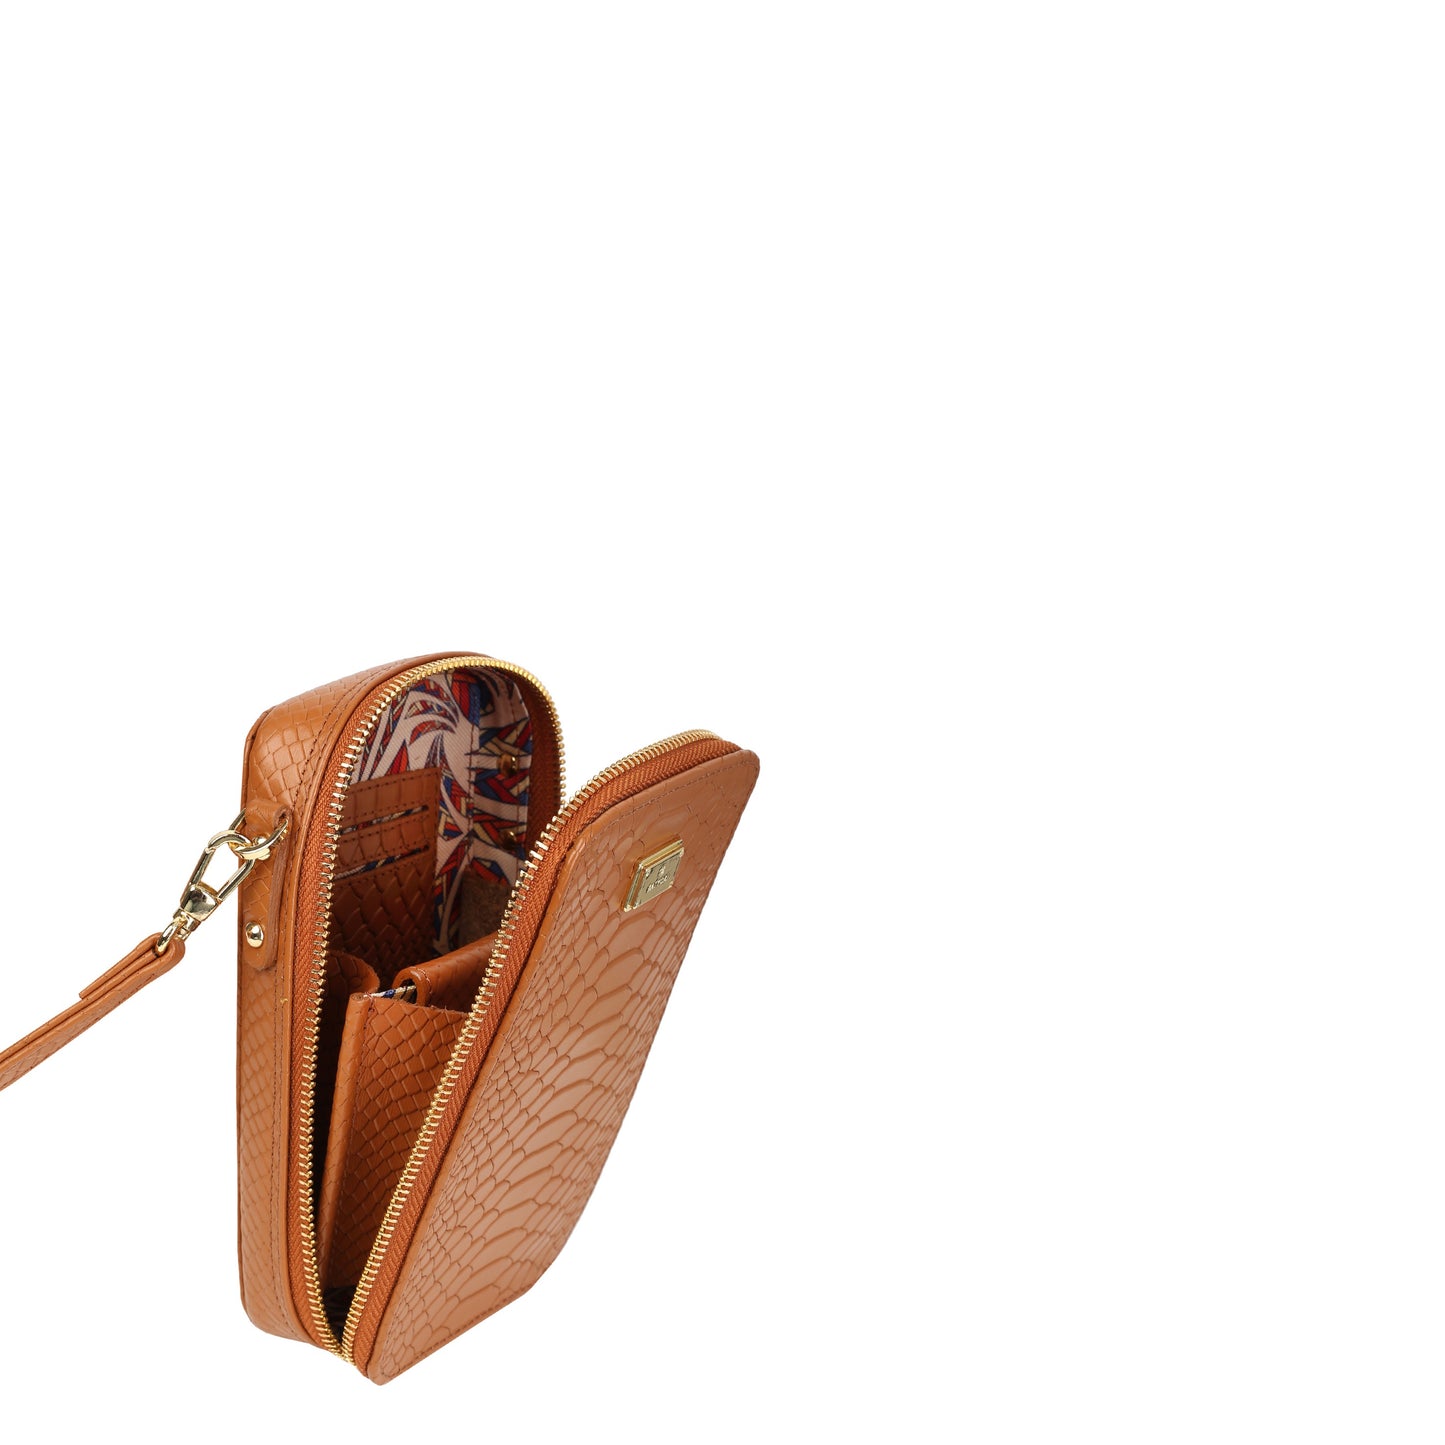 COGNAC leather phone case